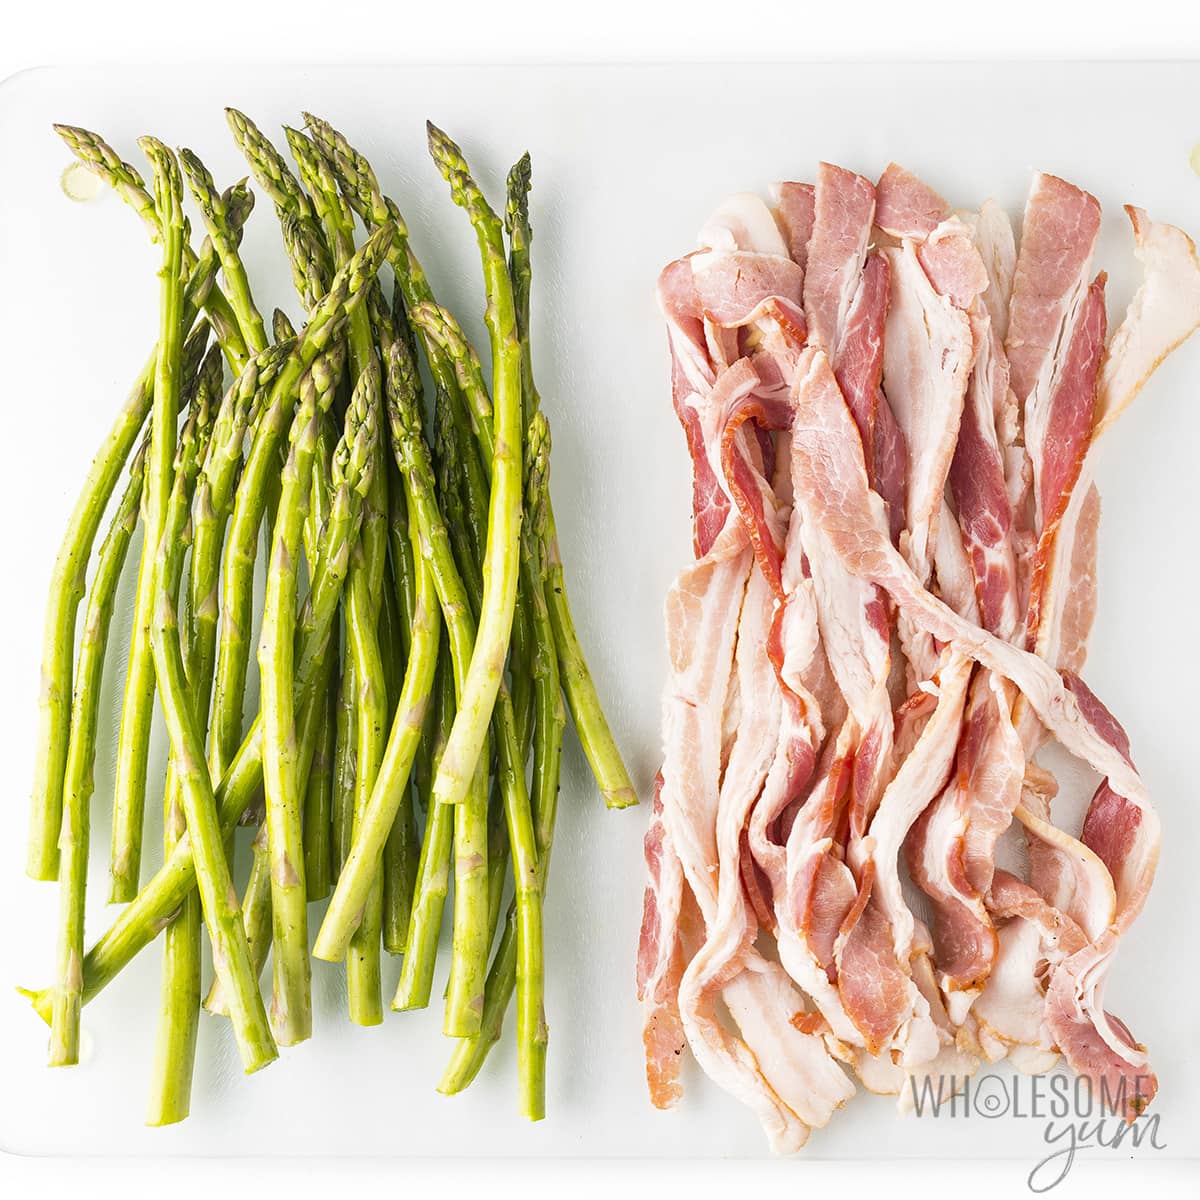 Trim the asparagus next to the bacon pieces.